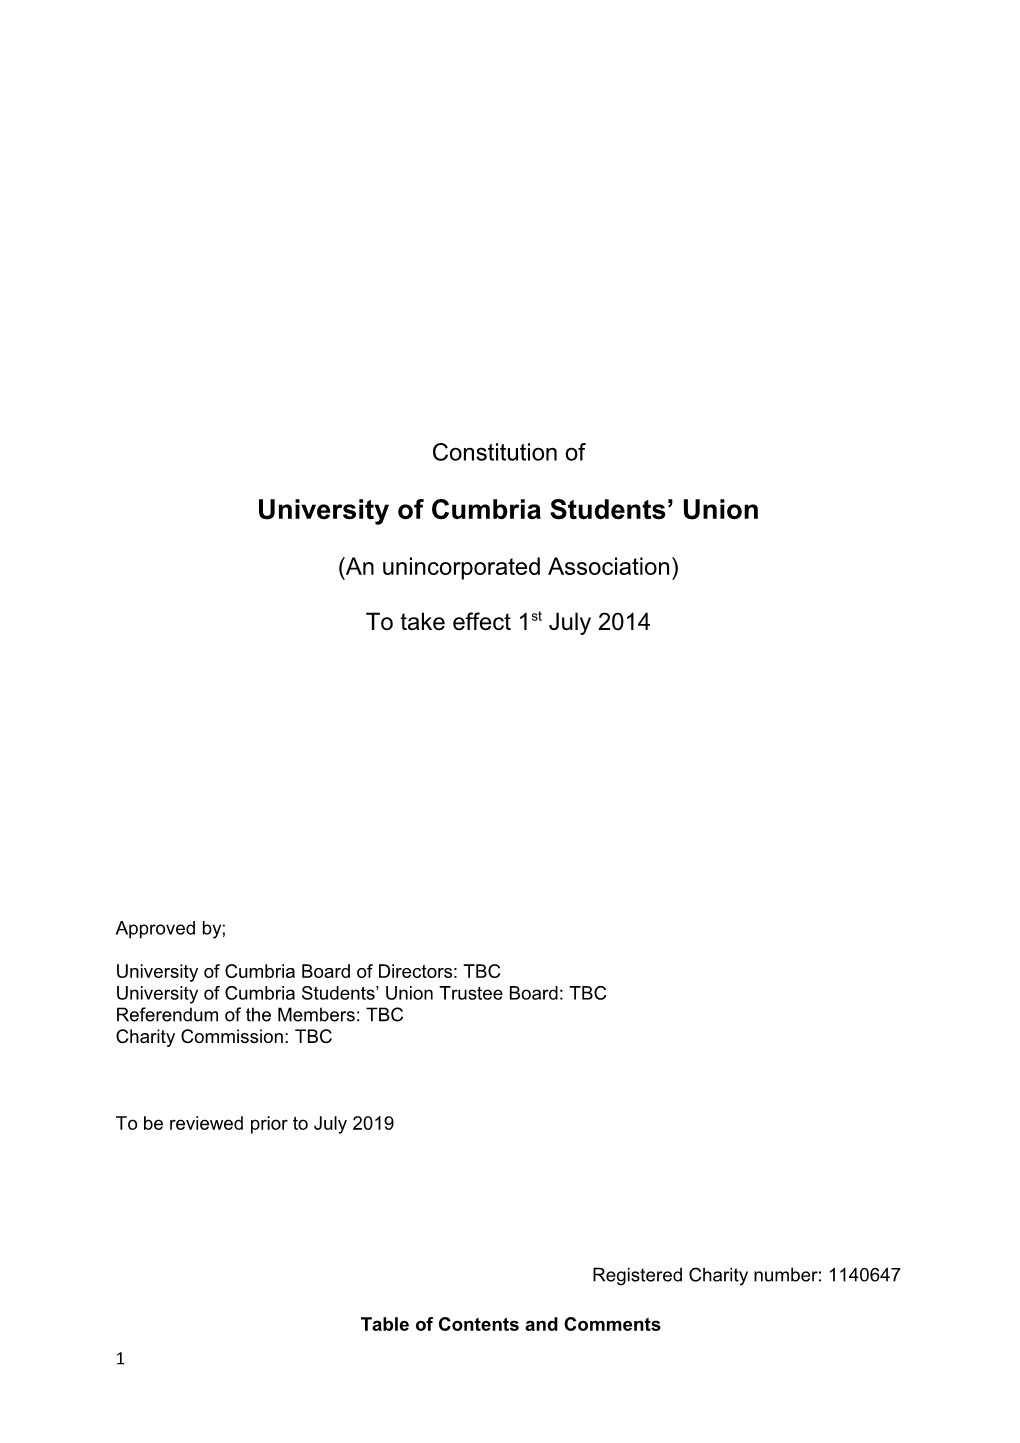 University of Cumbria Students Union